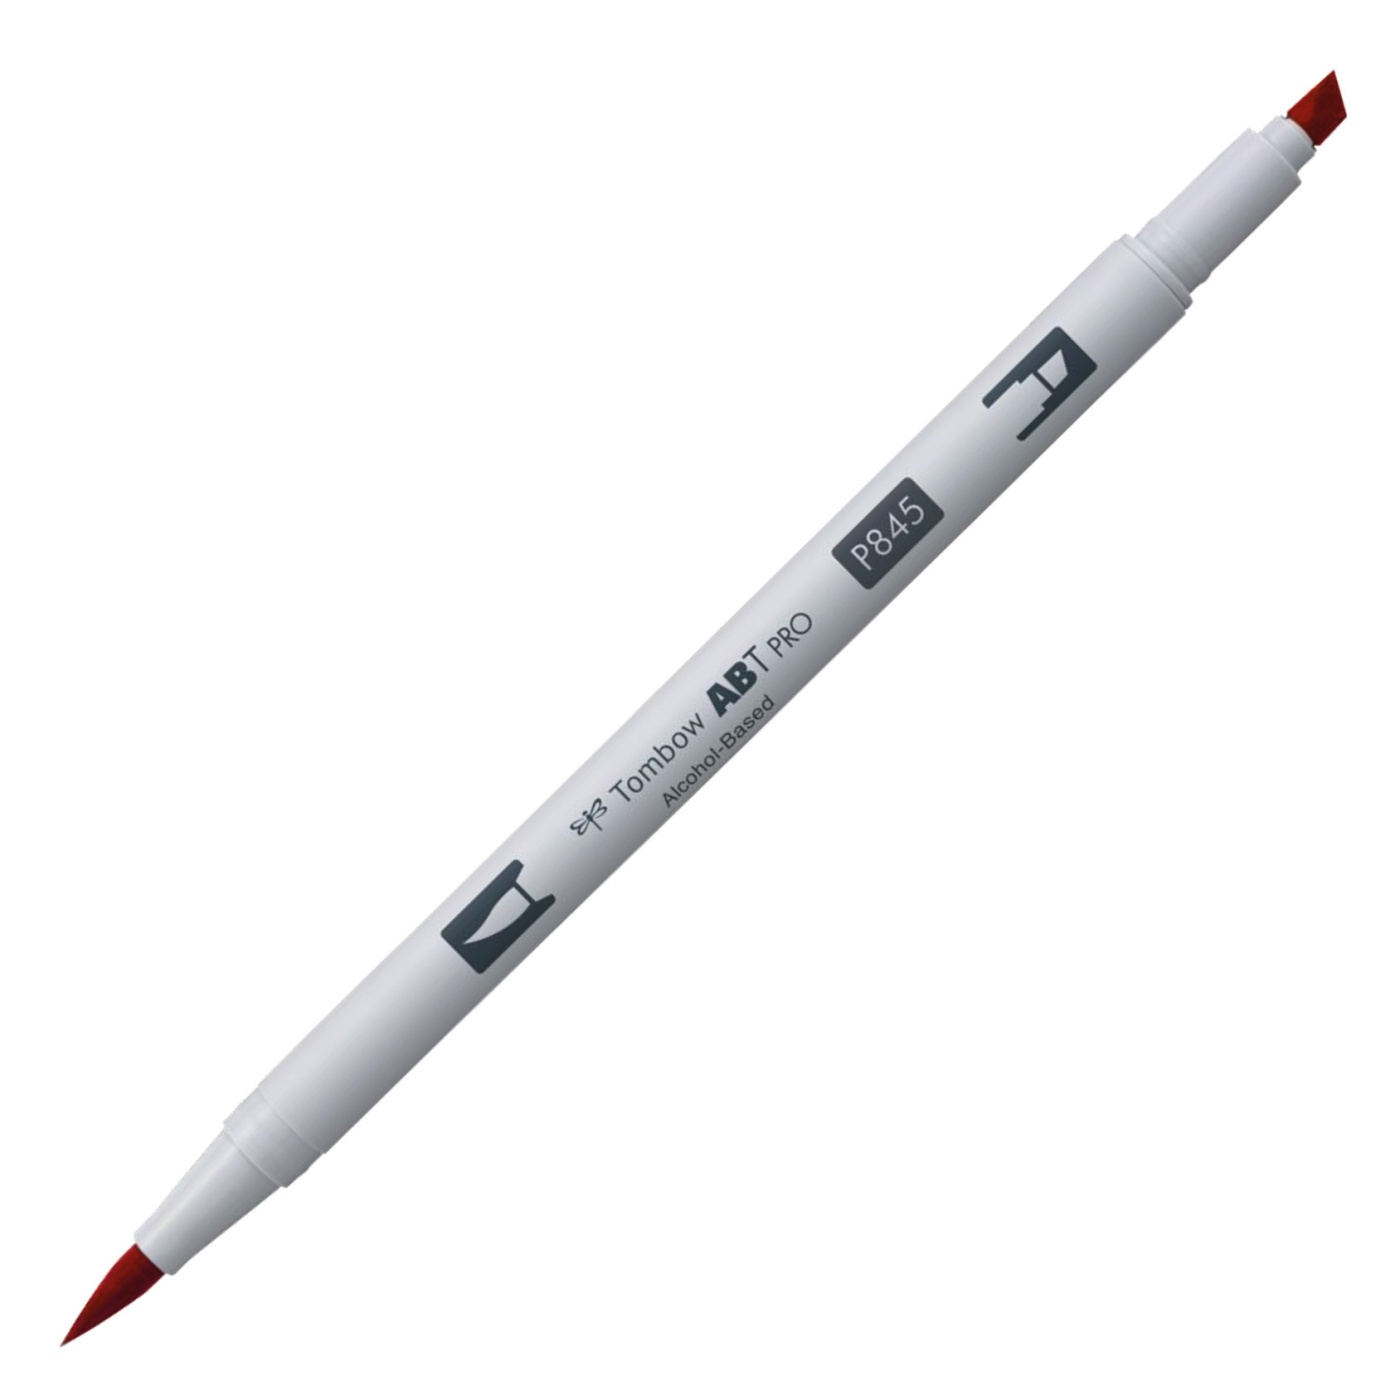 ABT PRO Dual Brush Pen 12-set Manga in the group Pens / Artist Pens / Illustration Markers at Pen Store (101256)